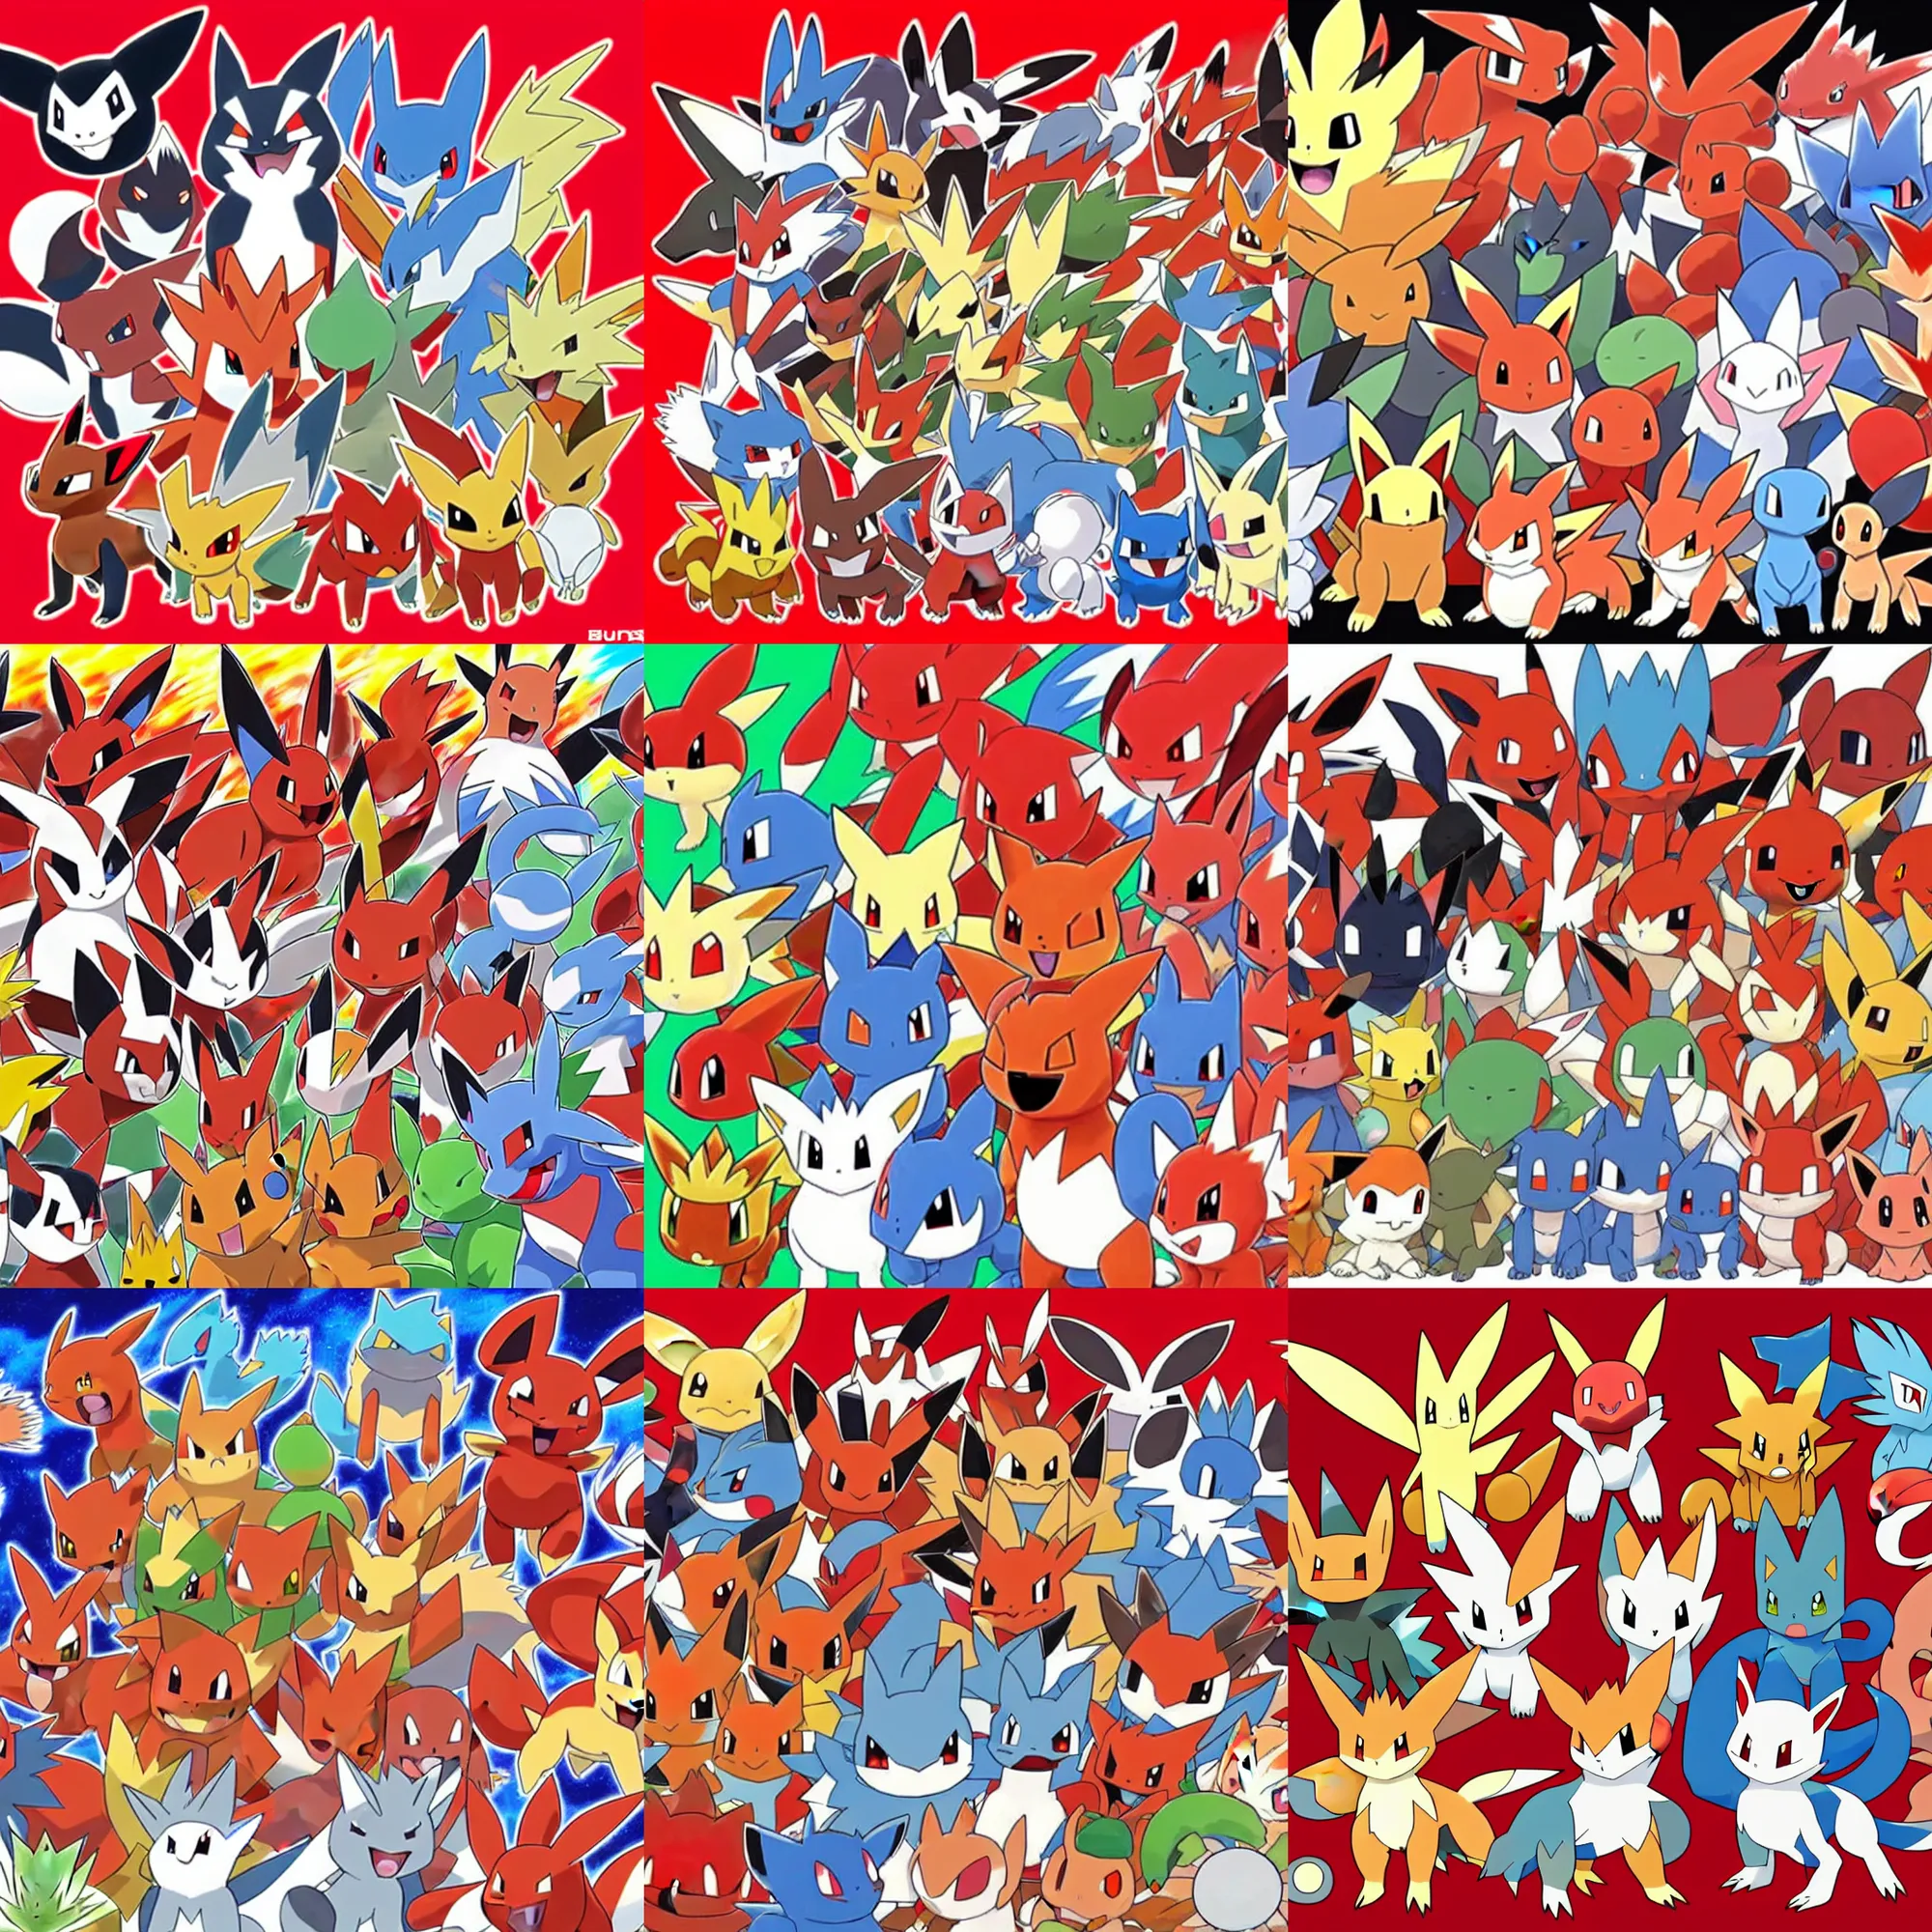 Prompt: official art of a diverse crowd of red Pokémon, by Ken Sugimori and Junichi Masuda, whitespace, Bulbapedia, Pokémon logo, Vulpix Arcanine Torkoal Darmanitan Volcarona Entei